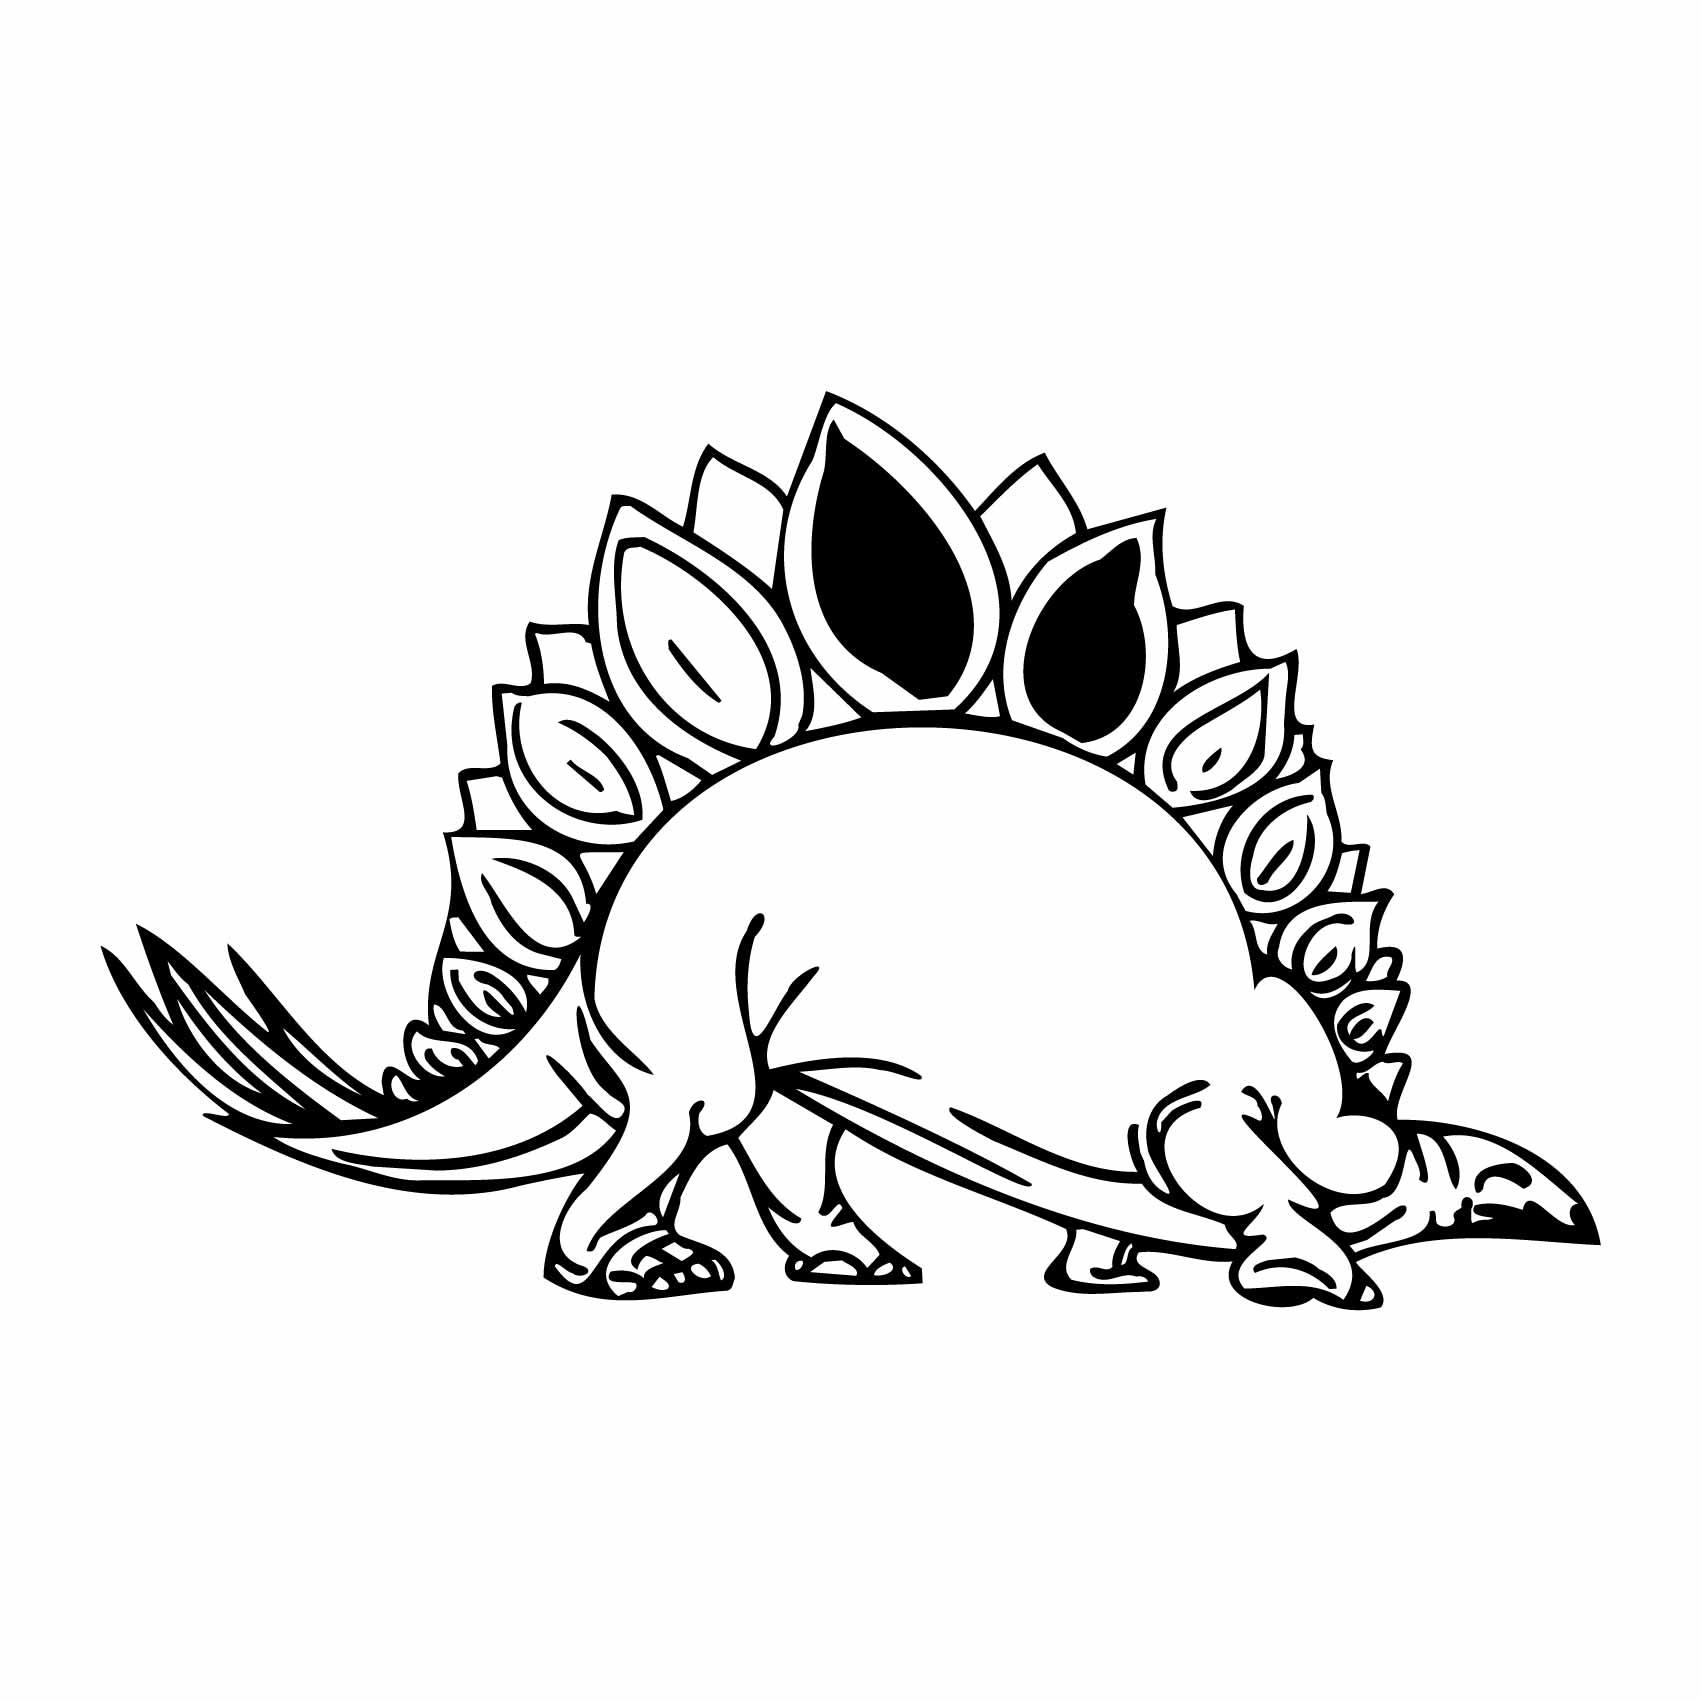 stickers-stegosaure-dinosaure-ref20dinosaure-stickers-muraux-dinosaure-autocollant-chambre-deco-sticker-mural-dinosaures-garçon-enfant-(2)